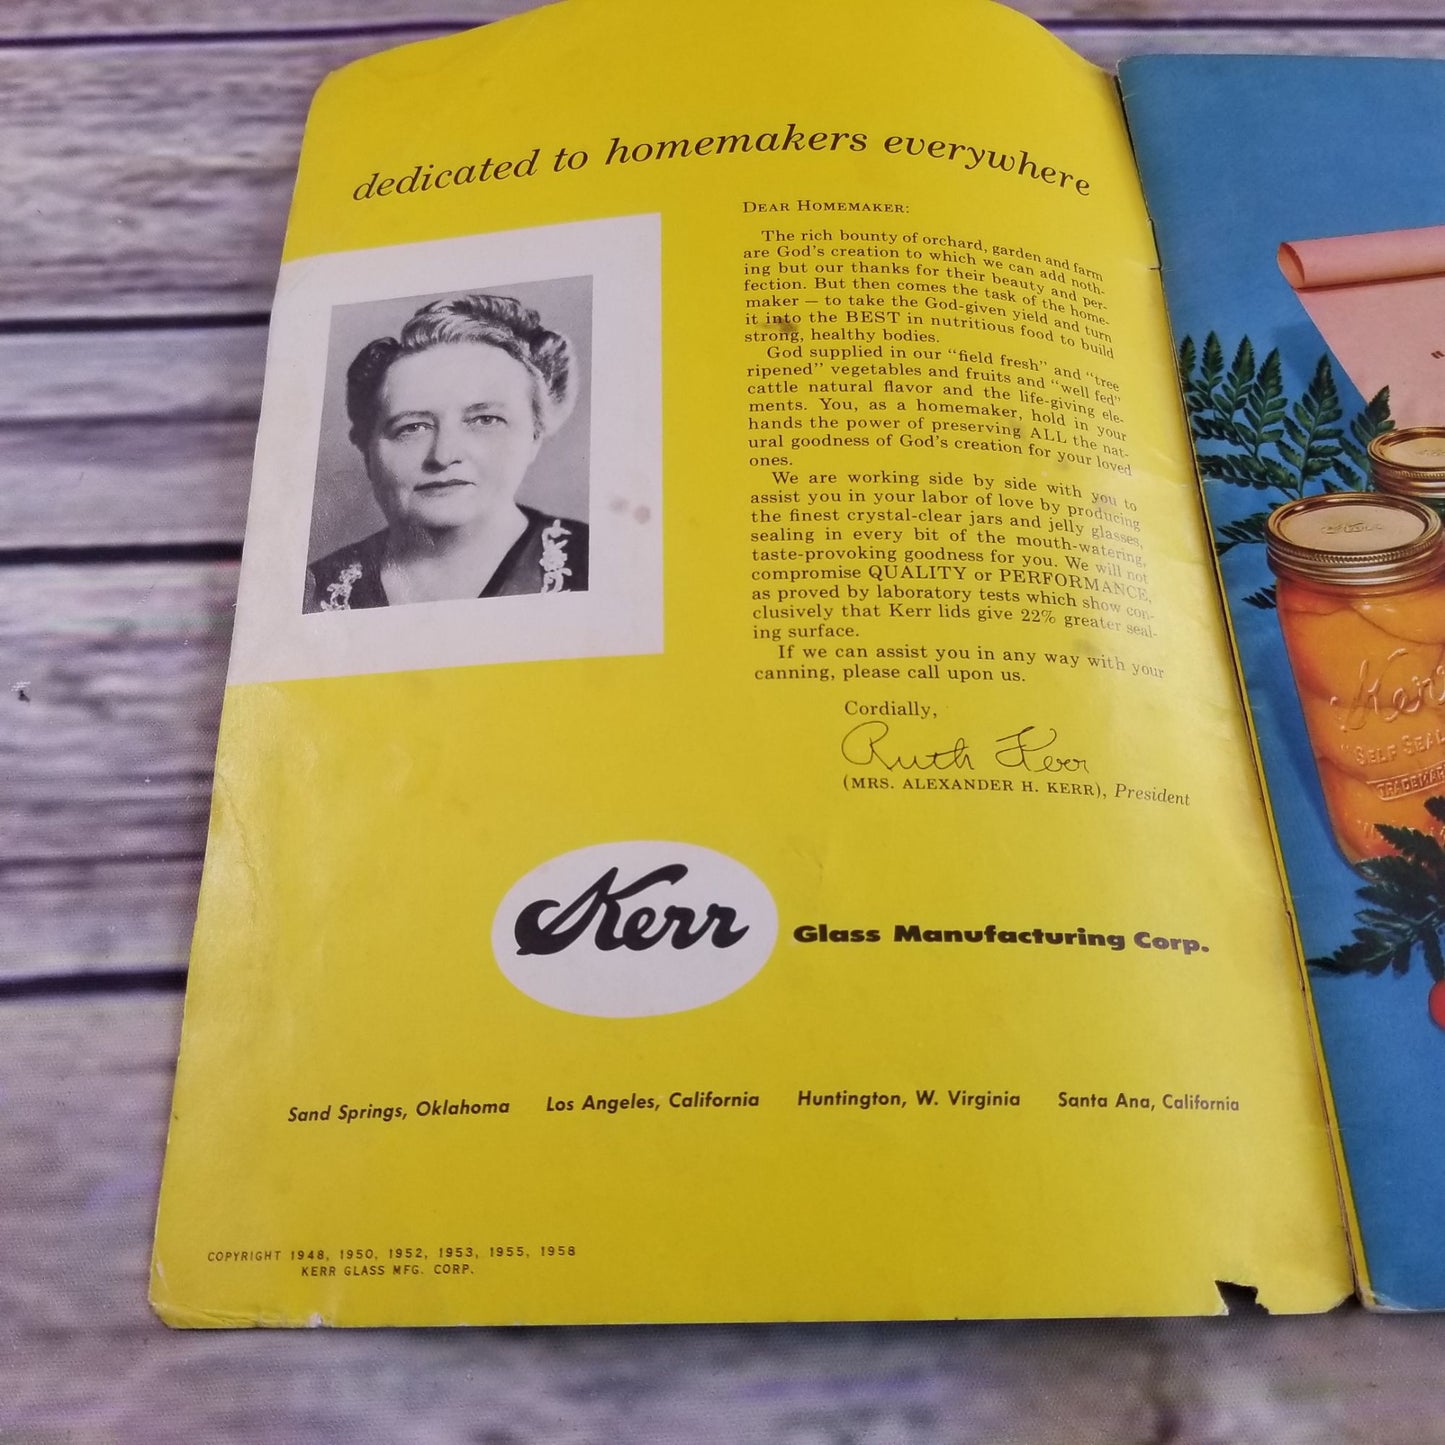 Vintage Kerr Home Canning and Freezing Book Cookbook Recipes 1958 Booklet Food Preservation Promo Ads Advertising